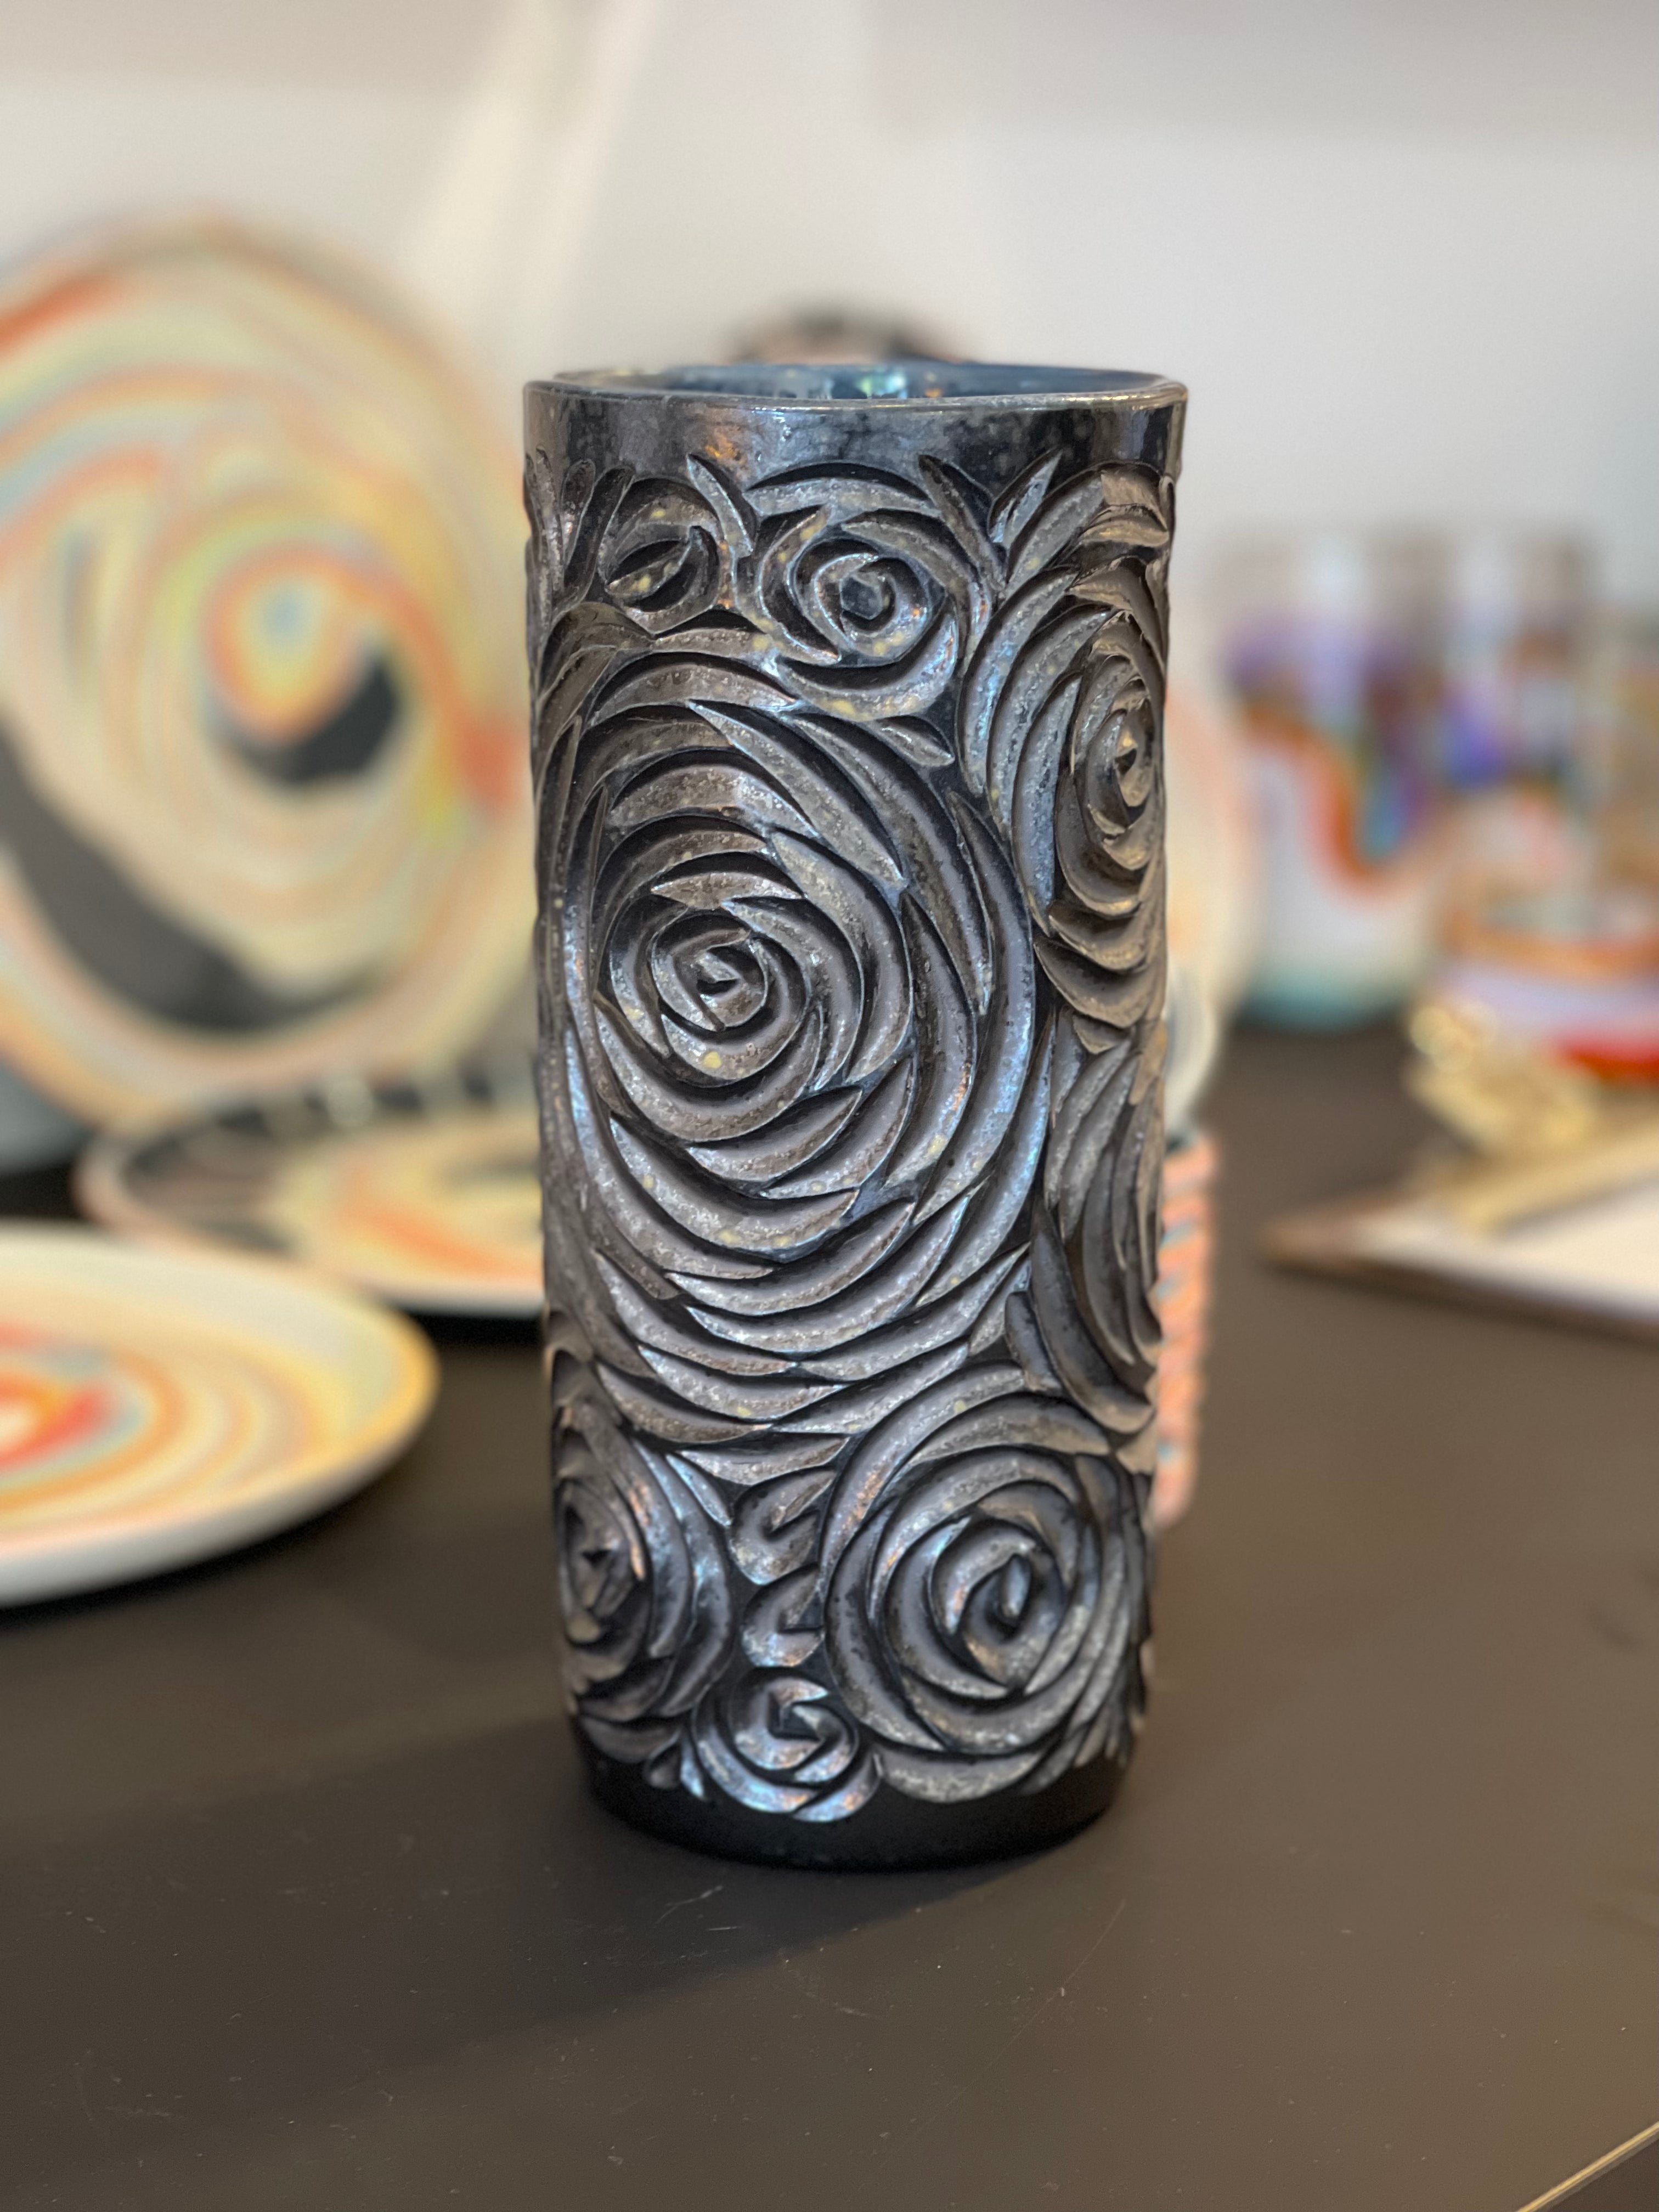 Wood fired swirl vase